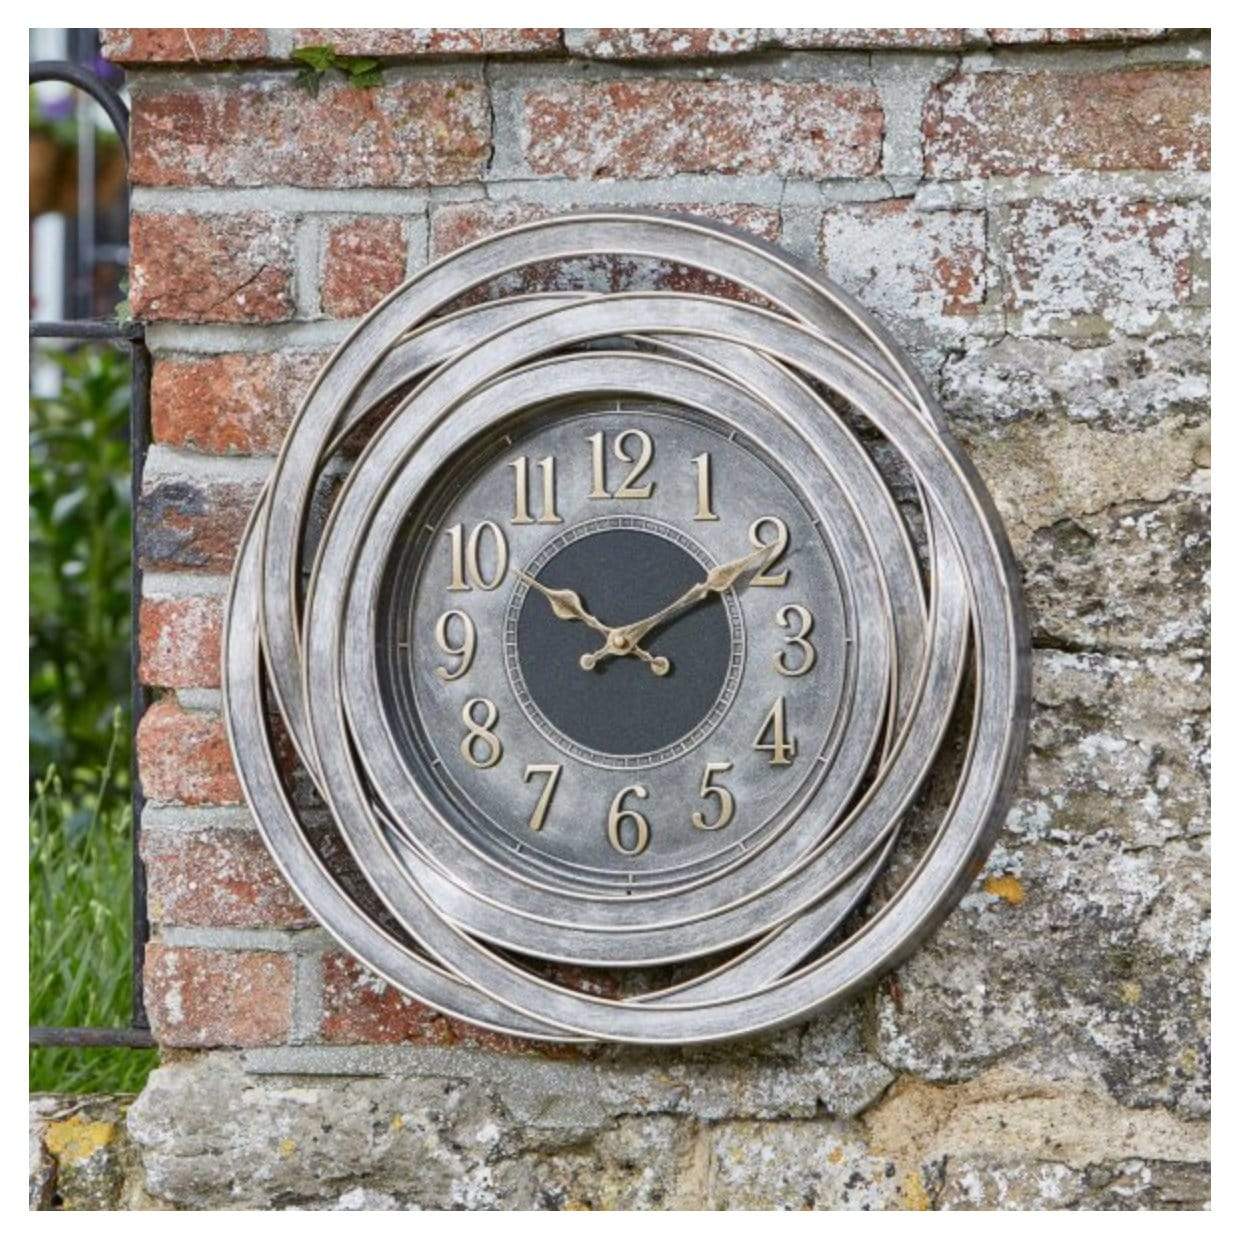 Smart Garden Clocks The Smart Garden Ripley Wall Clock